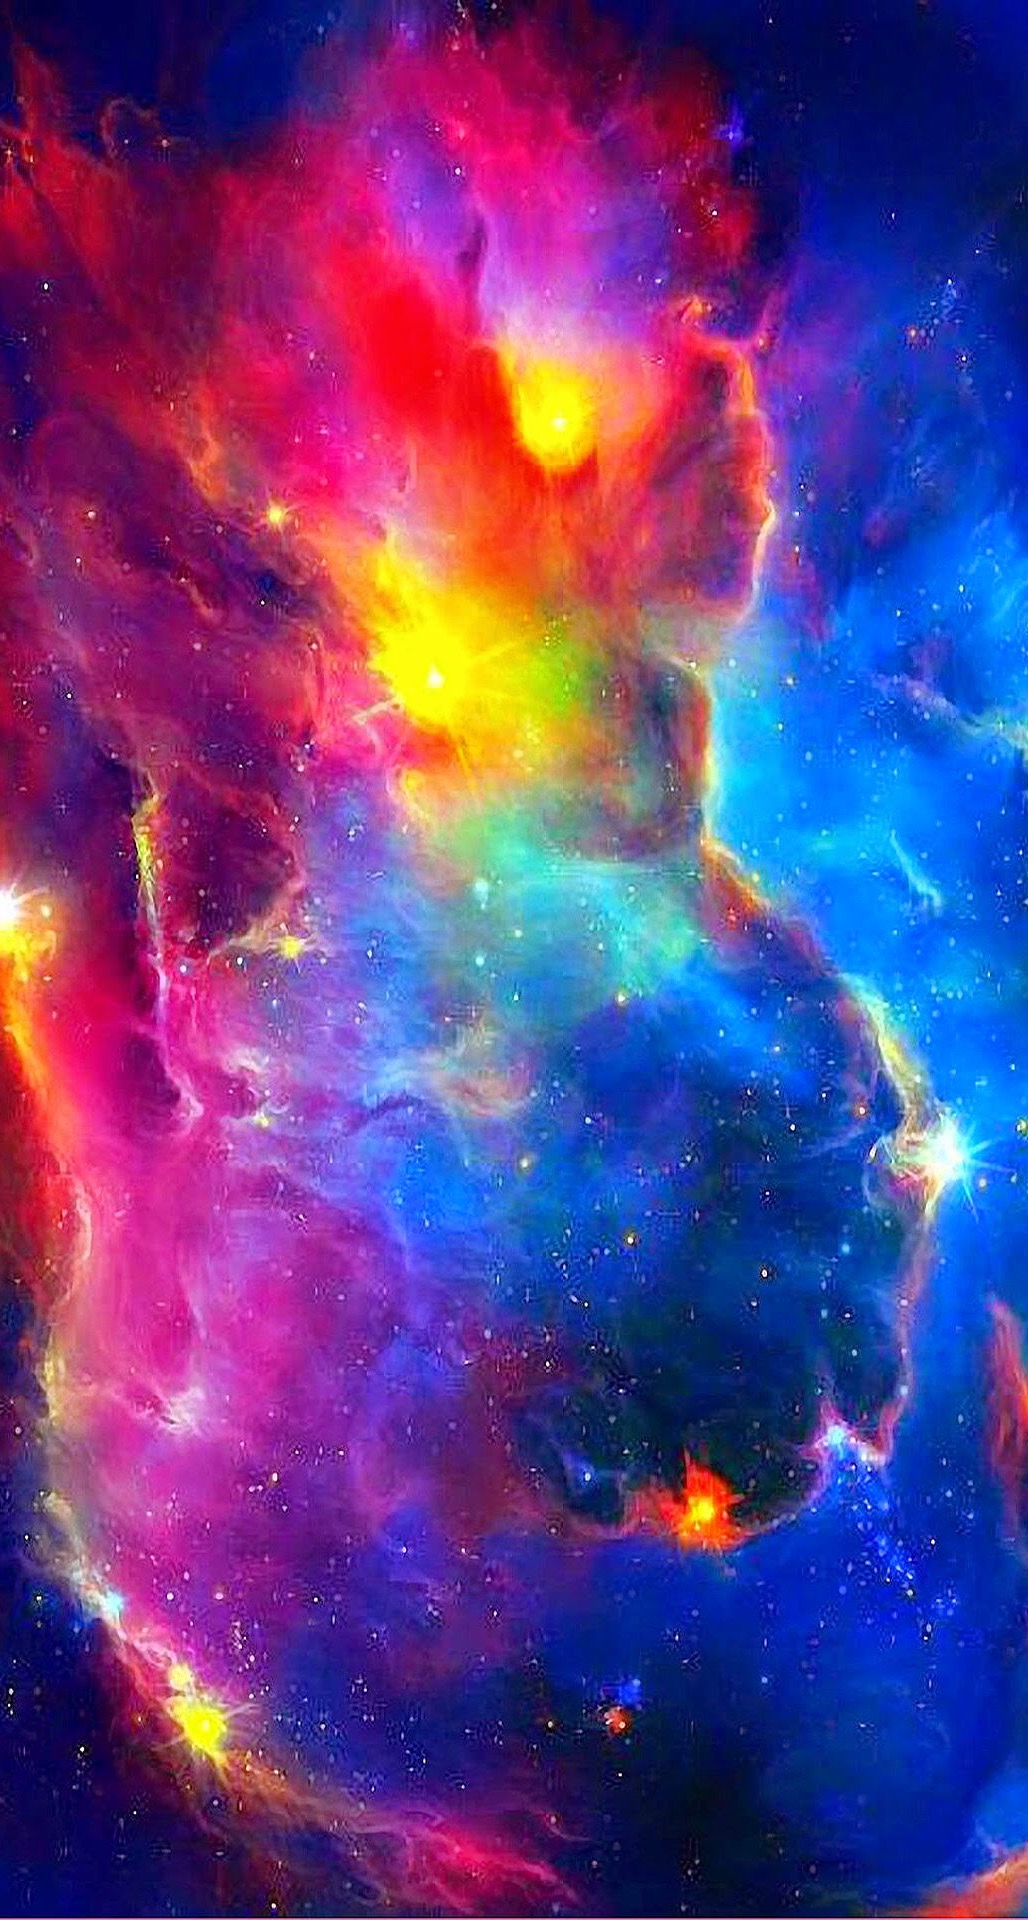 Space Nebula Stars iPhone 6 Plus HD Wallpaper iPod Wallpaper